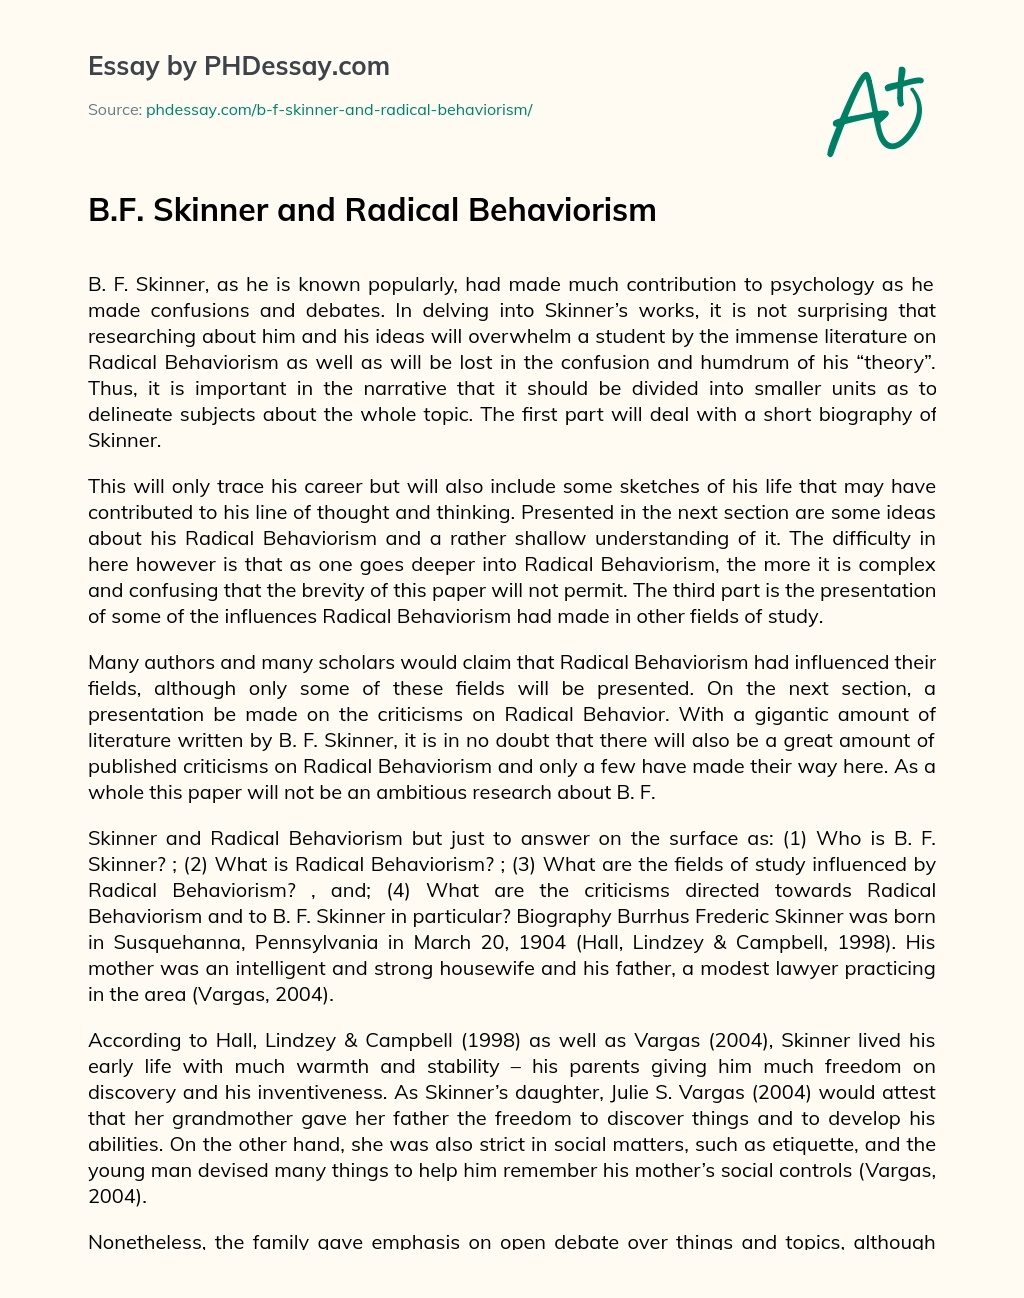 B.F. Skinner and Radical Behaviorism essay